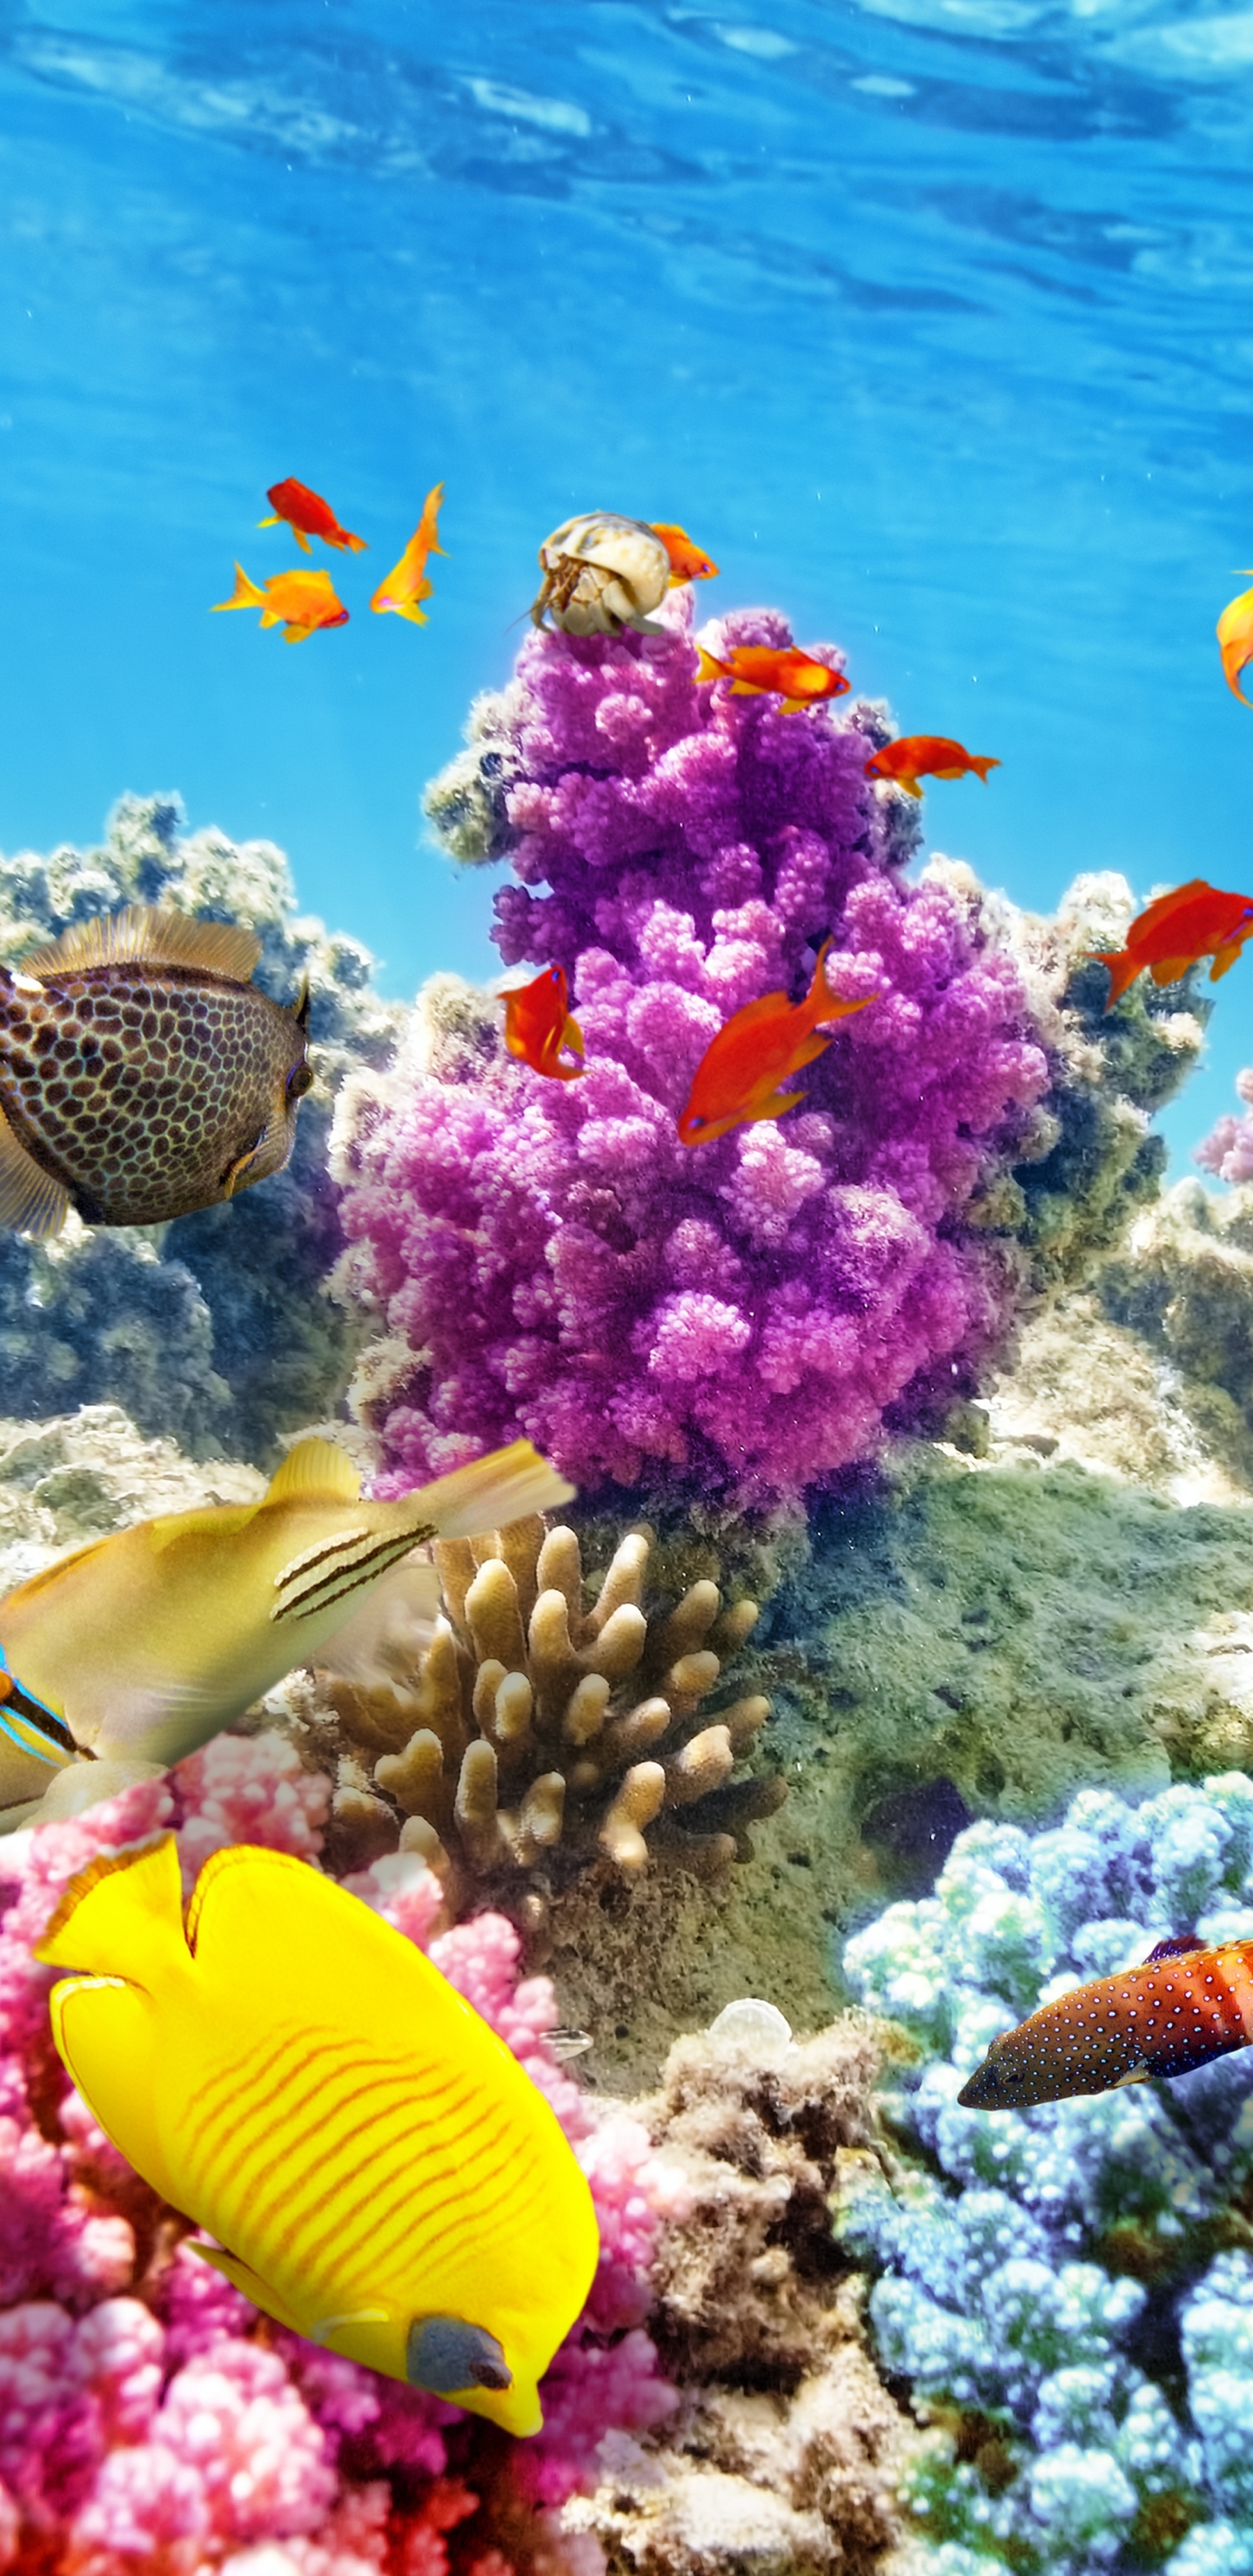 Full HD Wallpaper animal, fish, coral reef, underwater, ocean, fishes